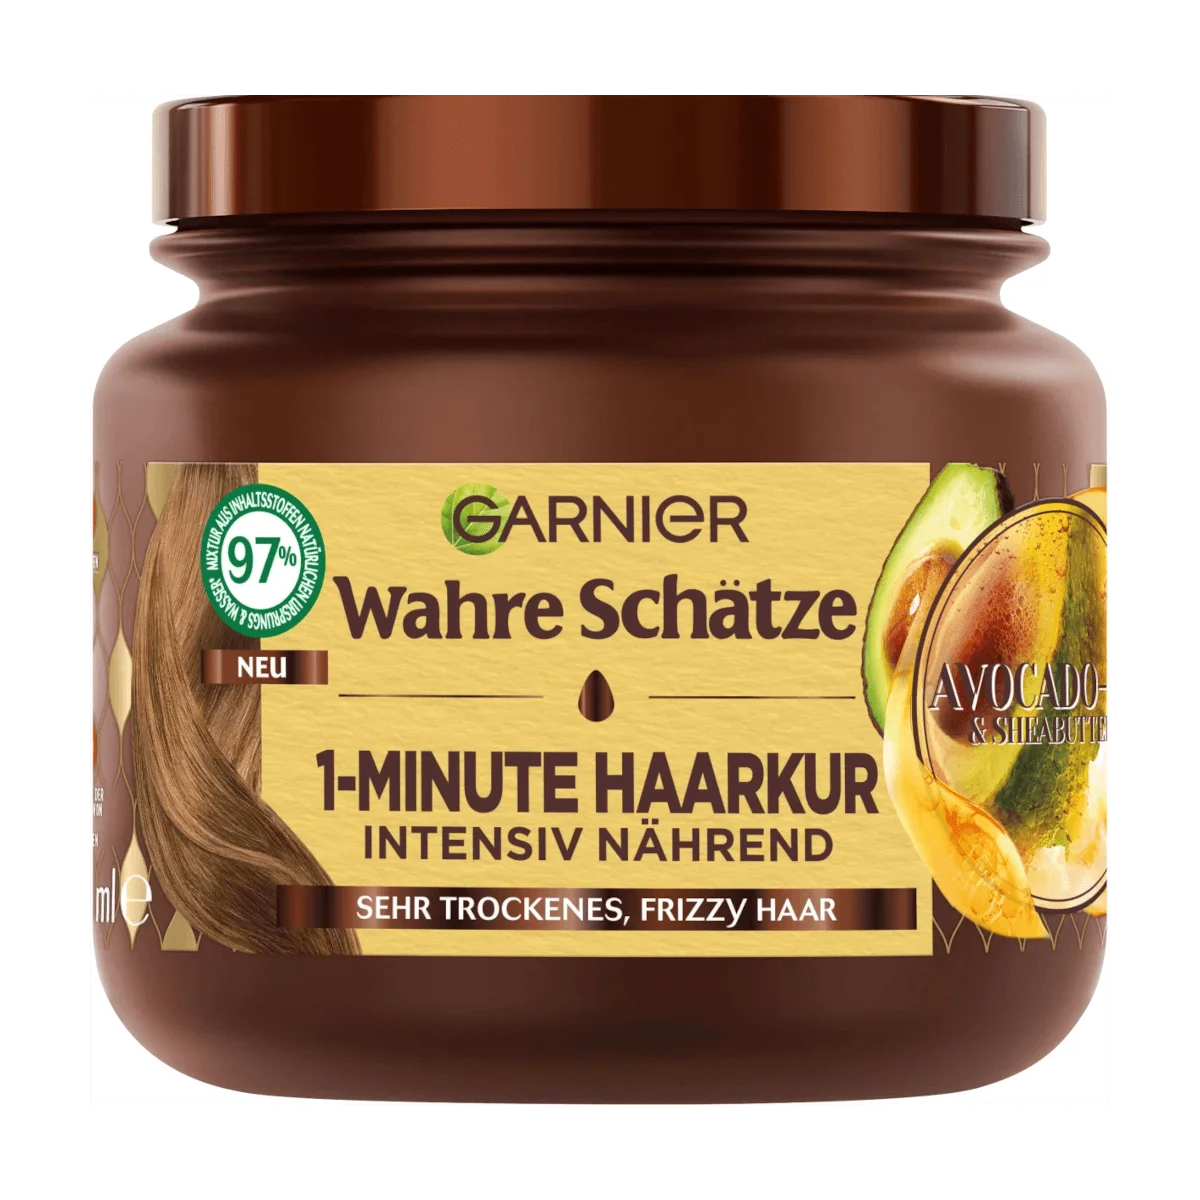 Garnier Wahre Schätze Haarkur 1-Minute Avocado-Öl & Sheabutter, 340 ml